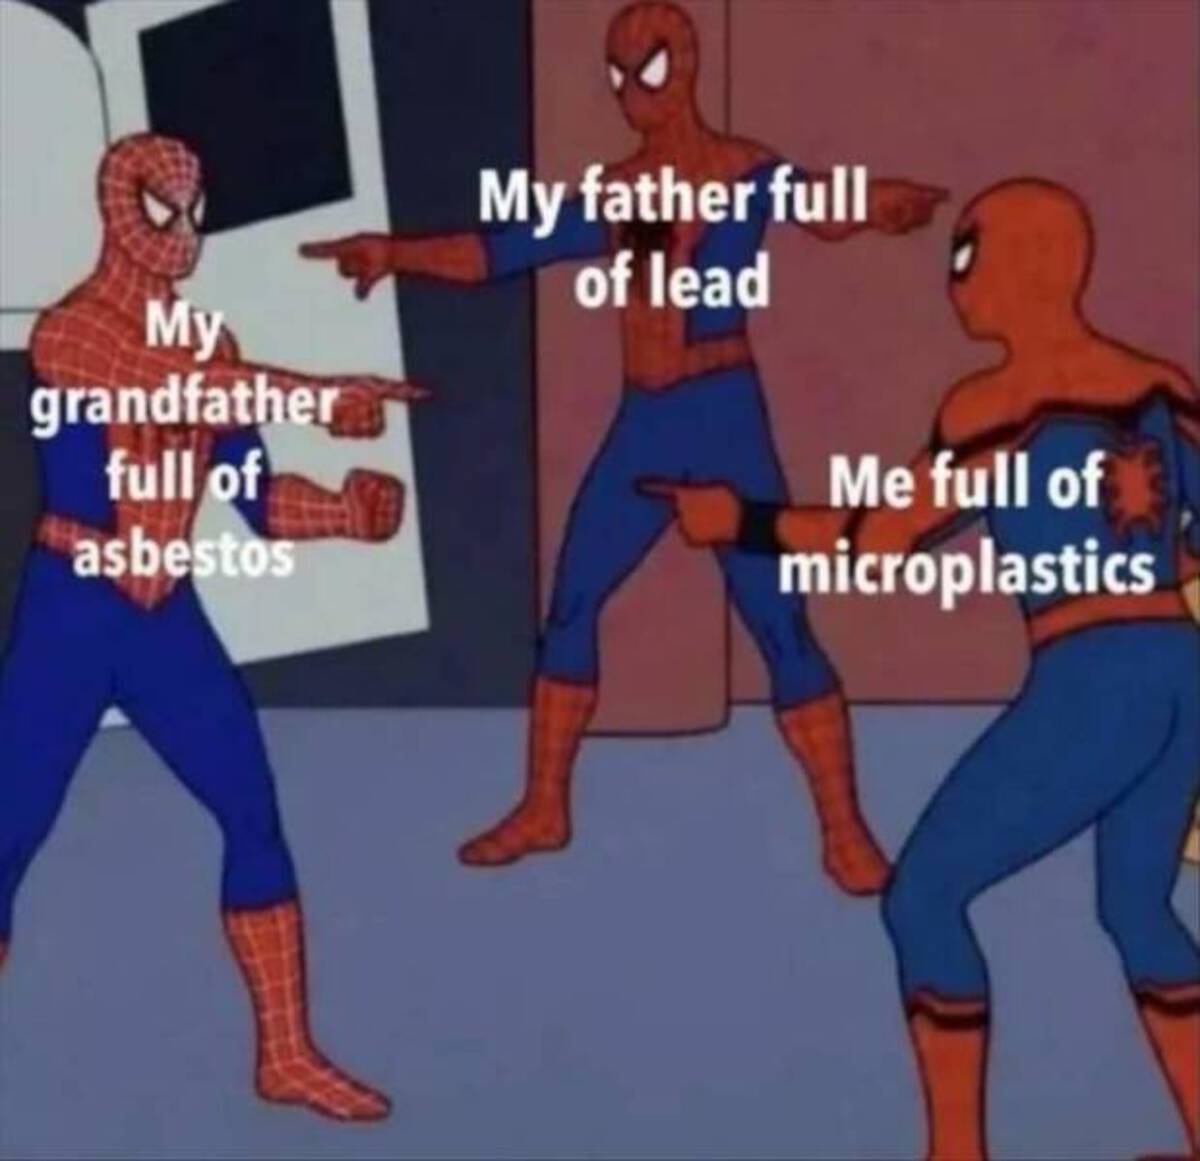 spiderman meets spiderman - My grandfather full of asbestos My father full of lead Me full of microplastics